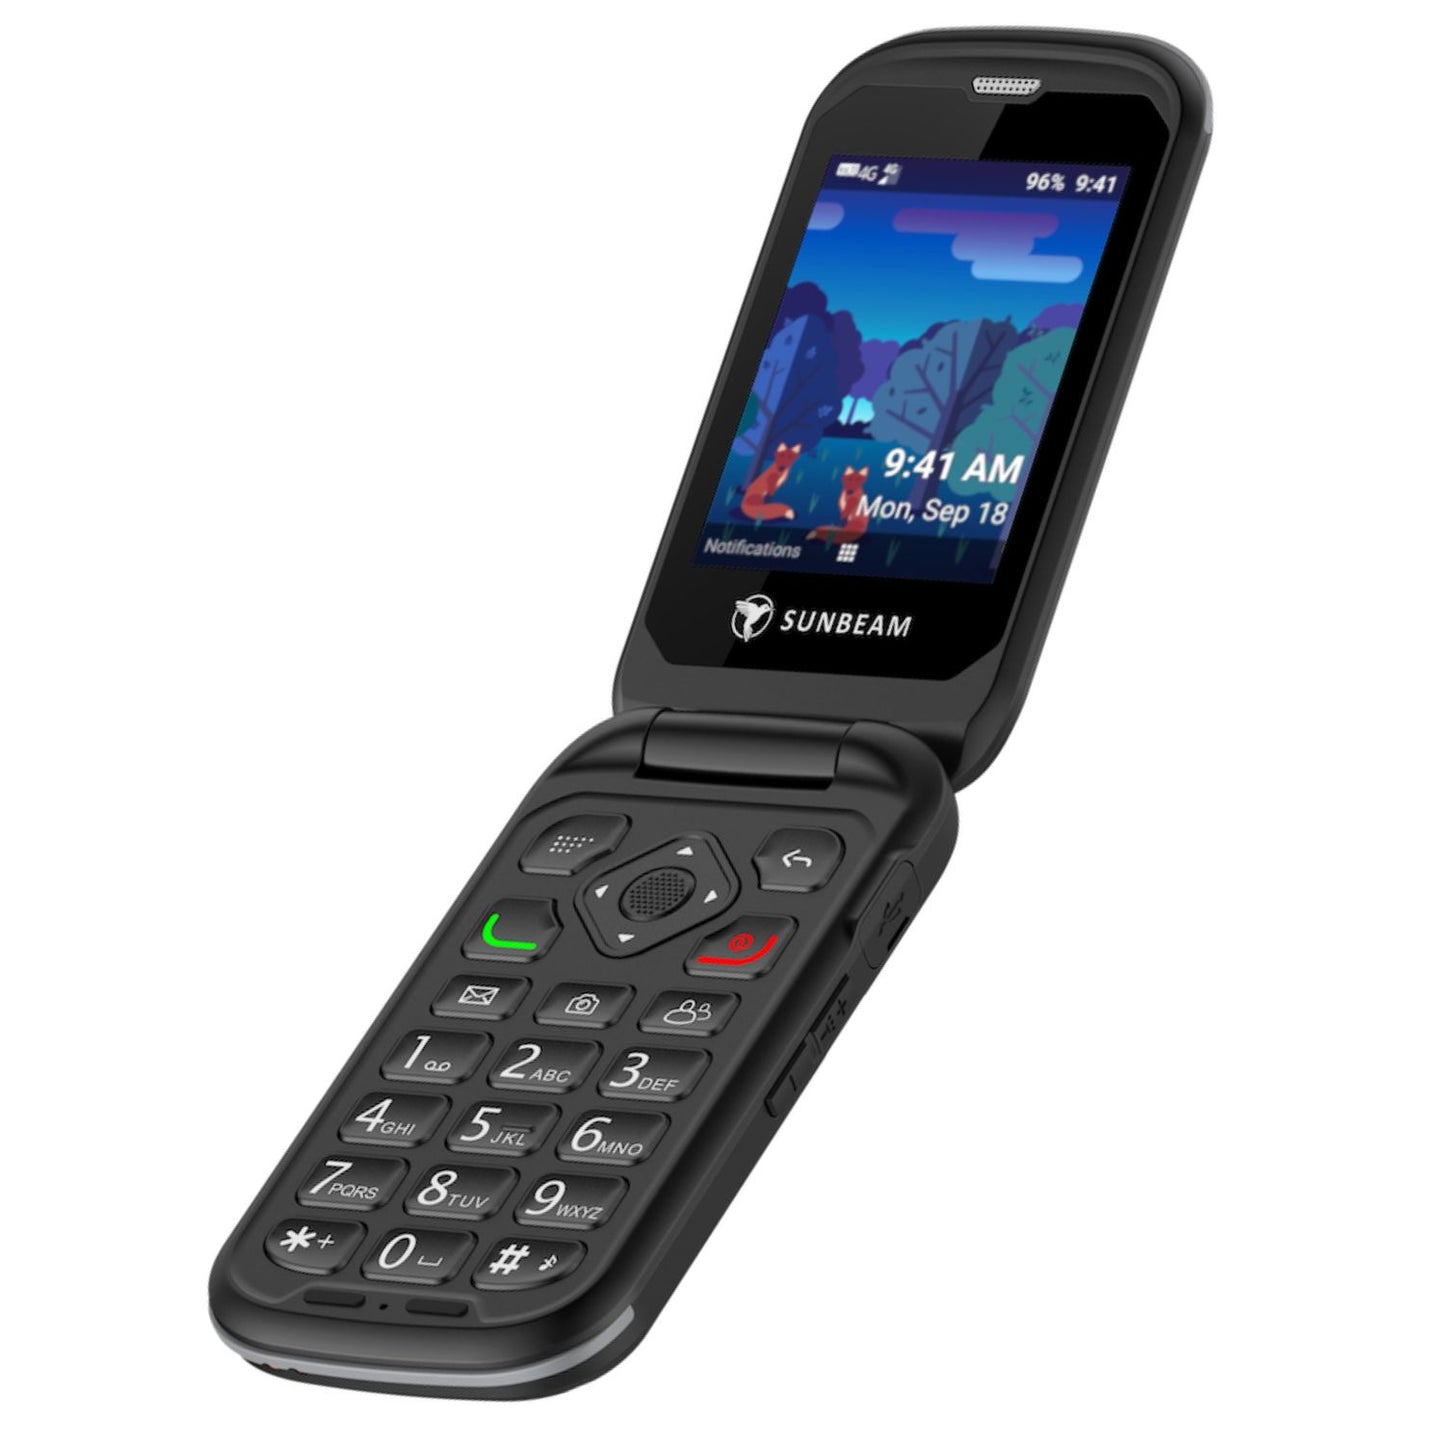 SUNBEAM F1 PRO, Cypress – Classic phone with Hotspot